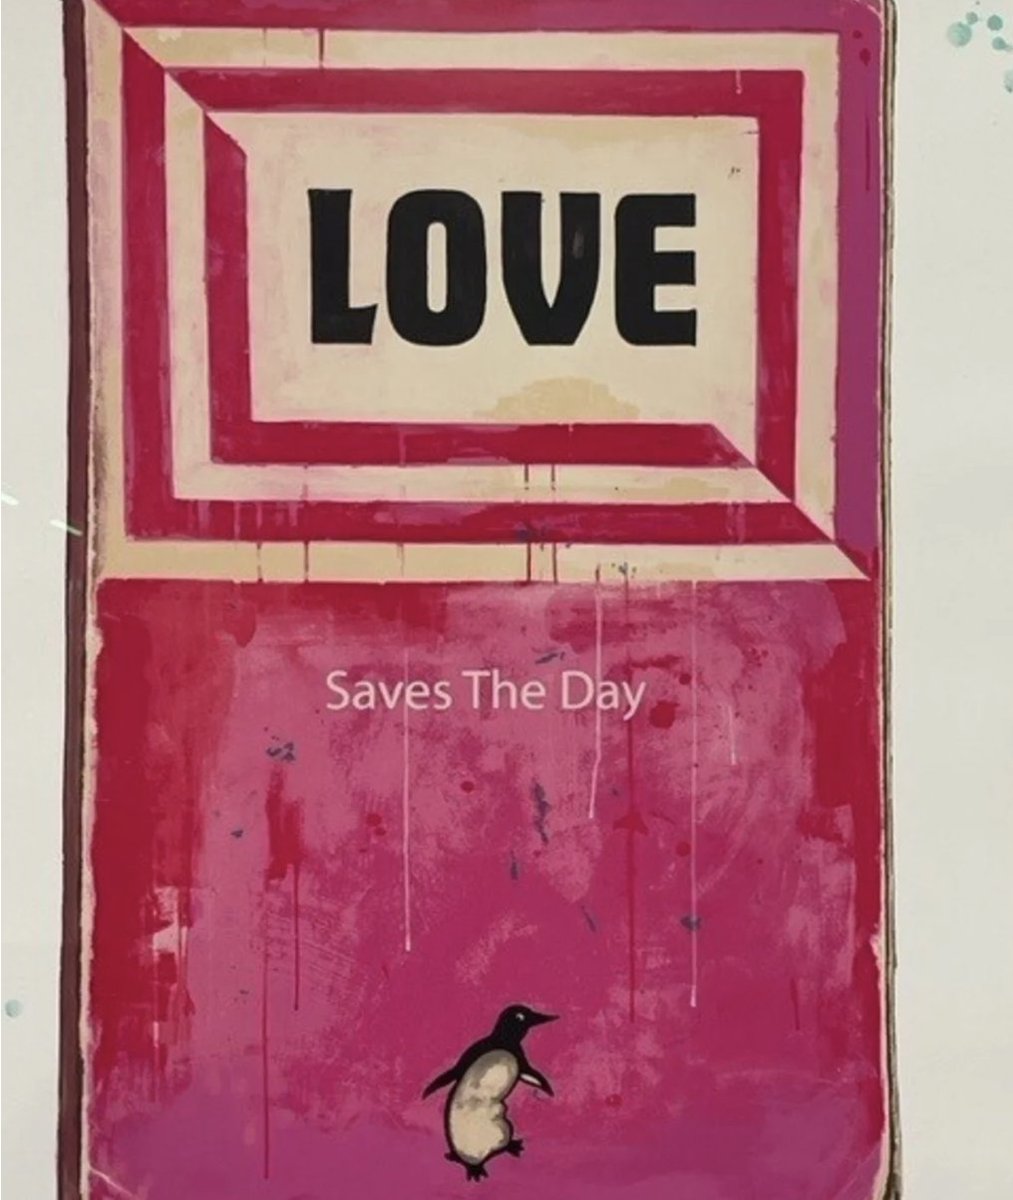 'The secret of art is love.' Happy Valentine's Day 🖤#antoinebourdelle #harlandmiller #lovesavestheday #heliumlondon #valentinesday #love #contemporaryart